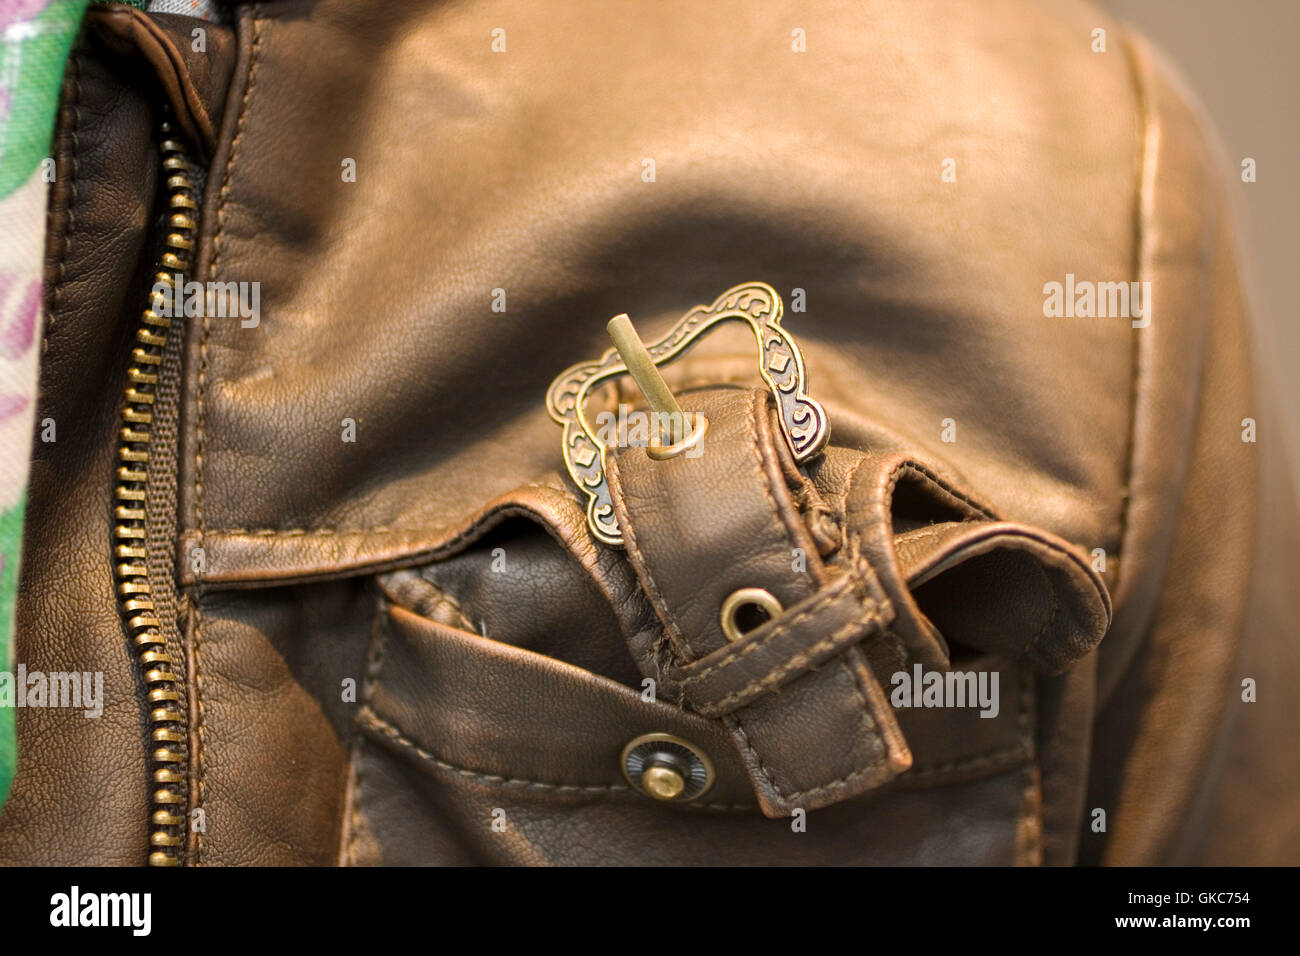 Cutaway jacket Stock Vector Images - Alamy